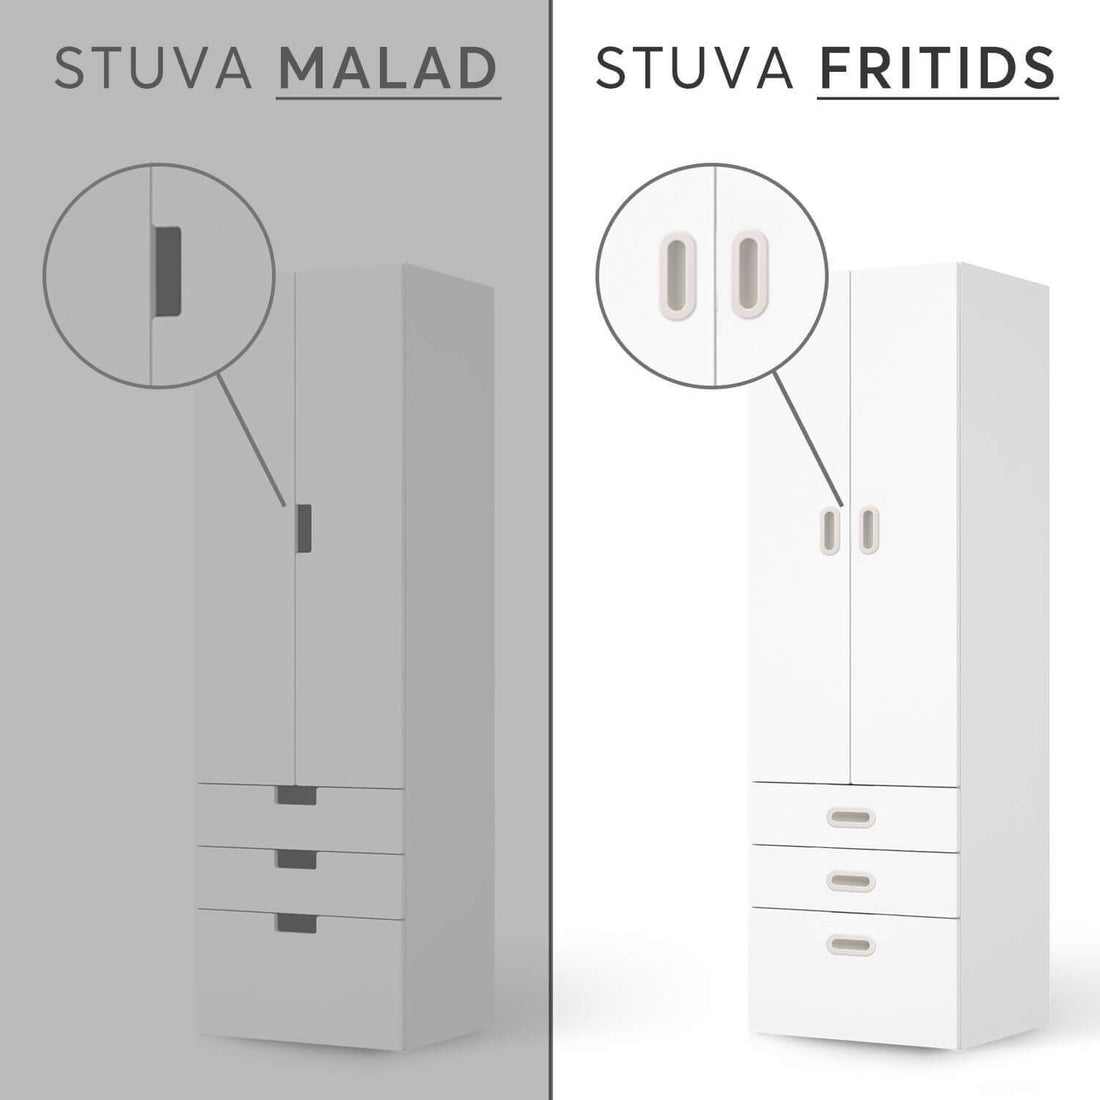 Vergleich IKEA Stuva Fritids / Malad - La Tour Eiffel